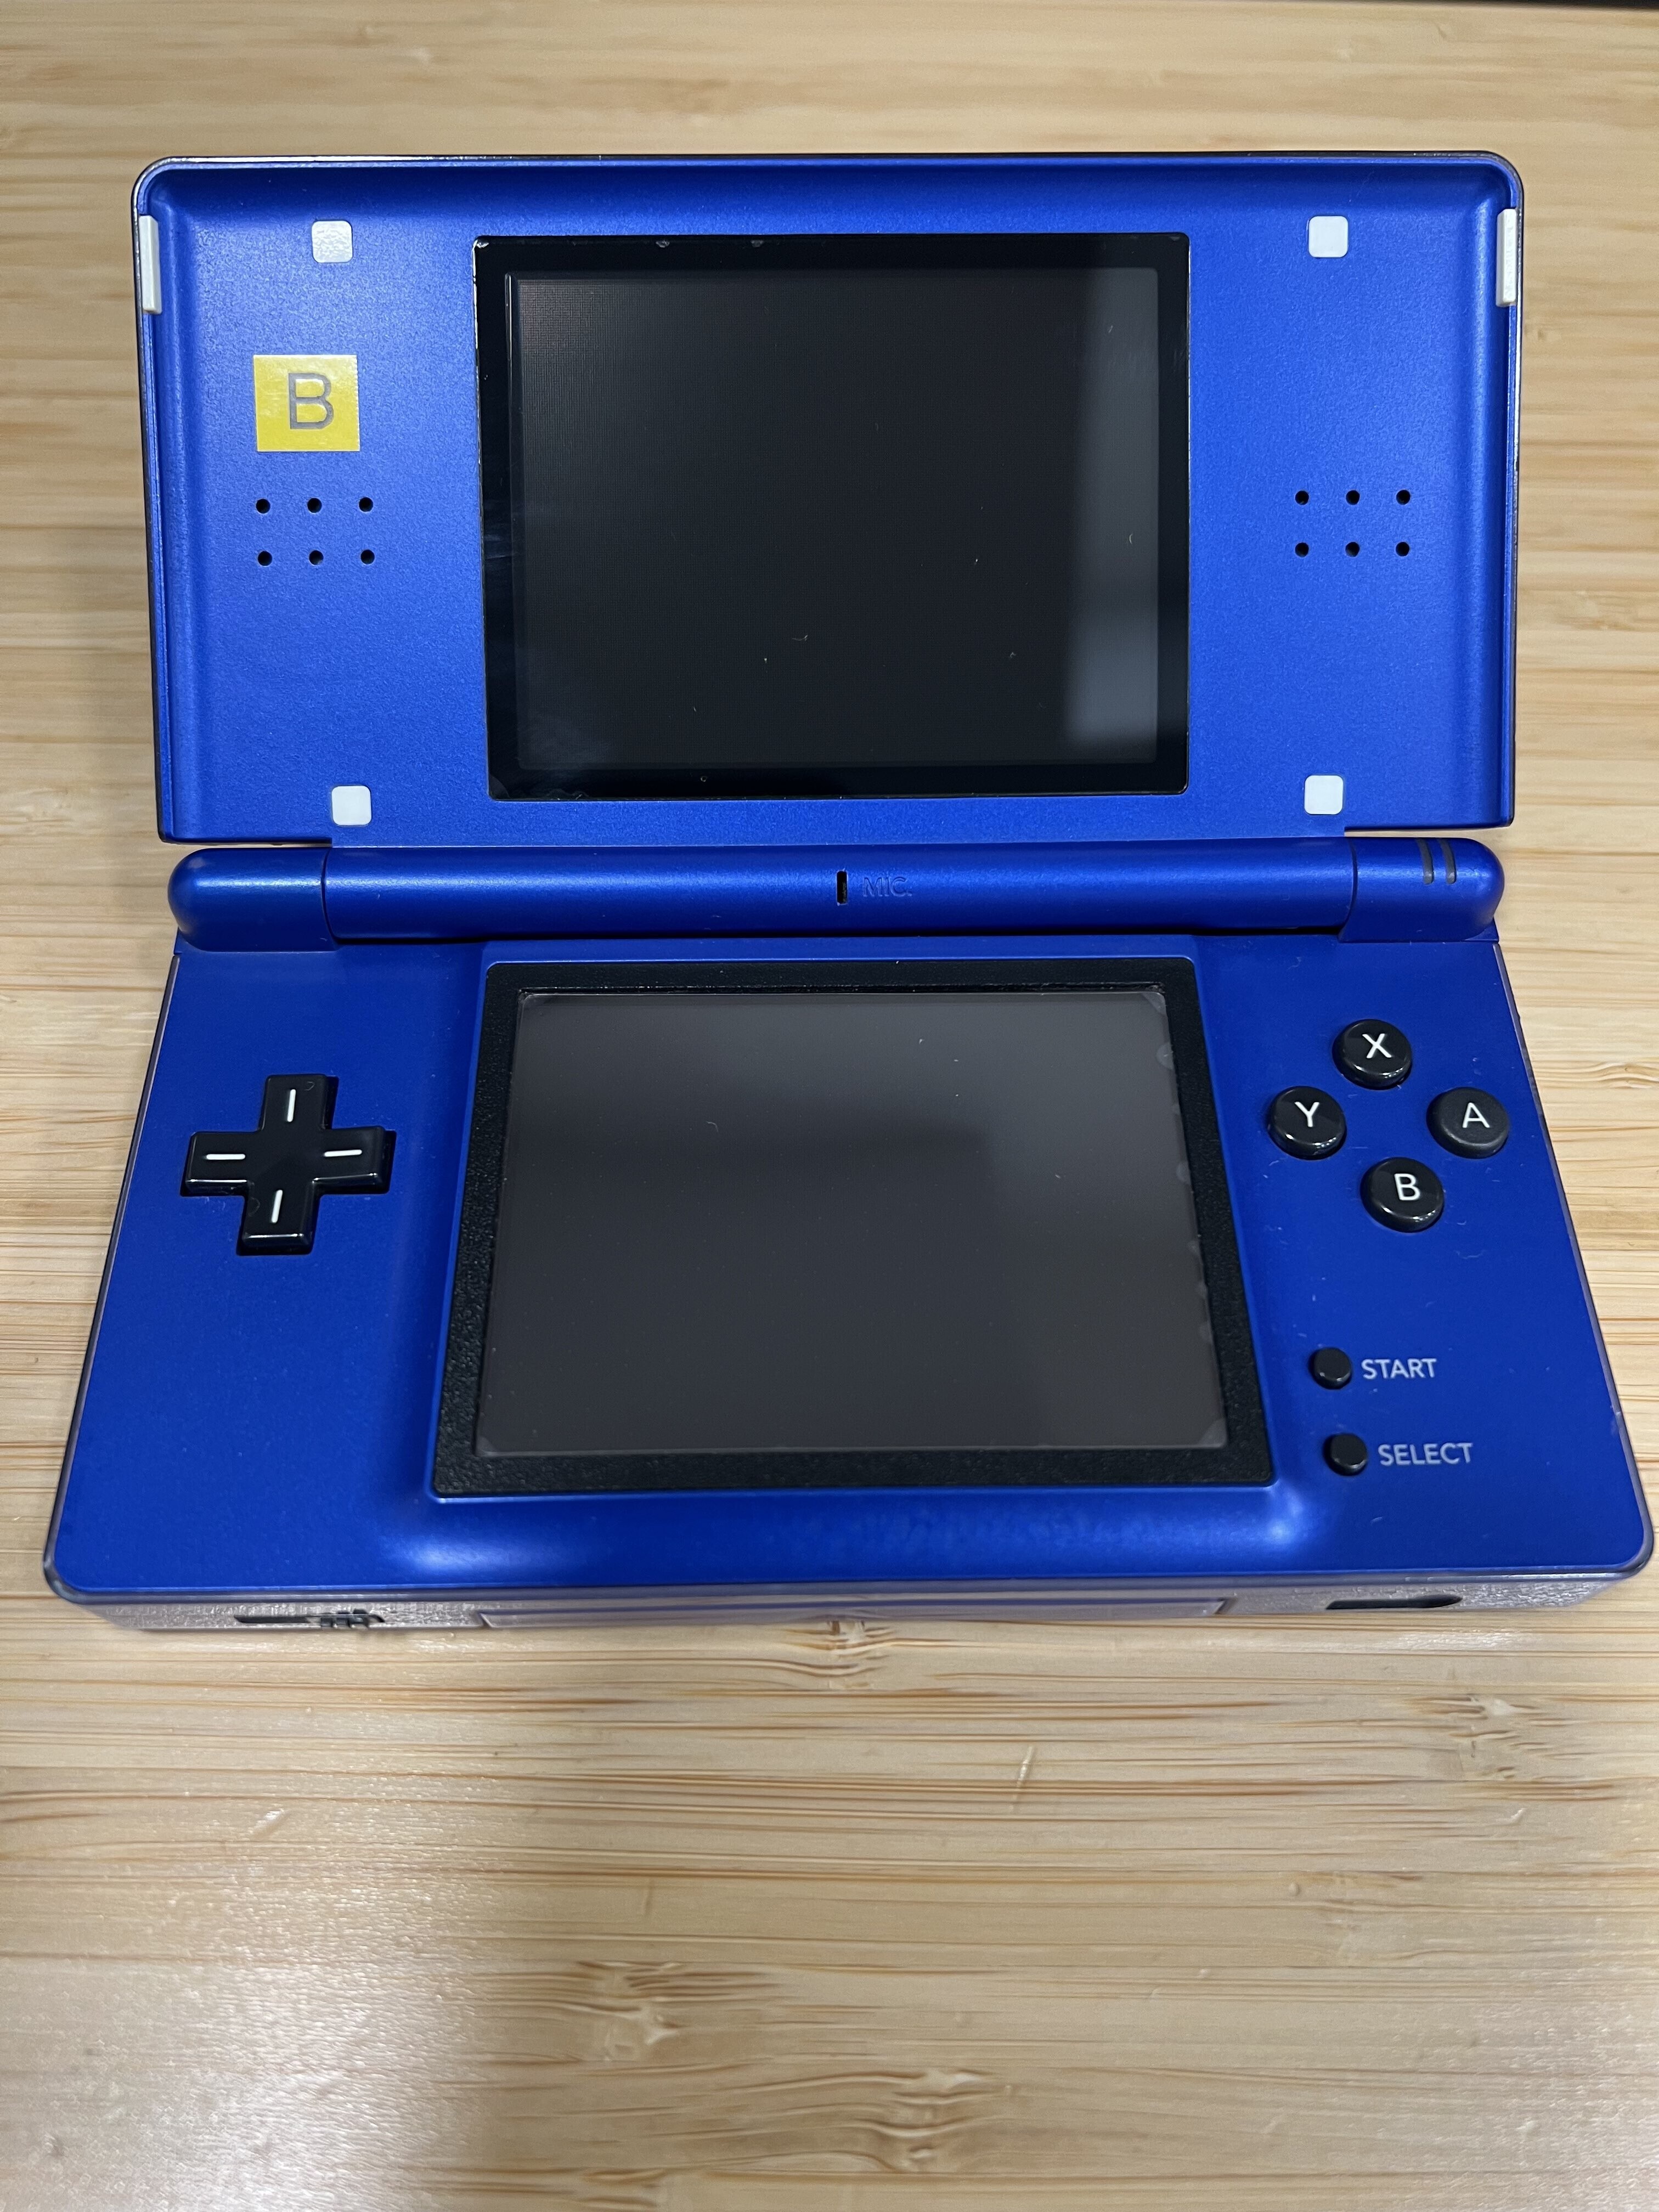  Nintendo DS lite X4 Prototype Console